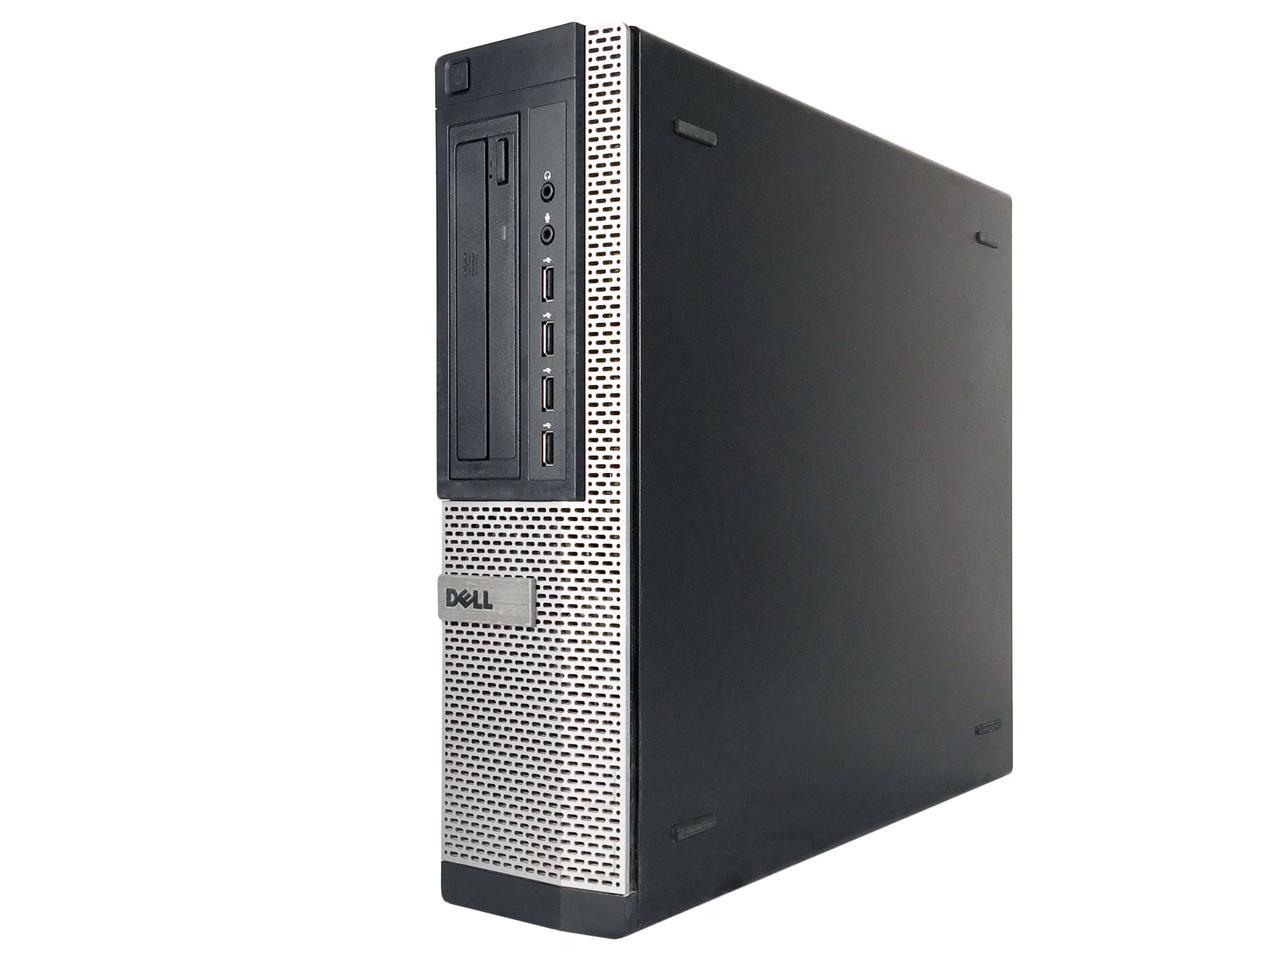 Refurbished Dell Grade A OptiPlex 990 Desktop Computer, Intel Core I5-2500 (3.3 GHz), 4G DDR3, 1T HDD, DVD, WIFI, Windows 10 Home 64-bit (English/Spanish), 1 Year Warranty